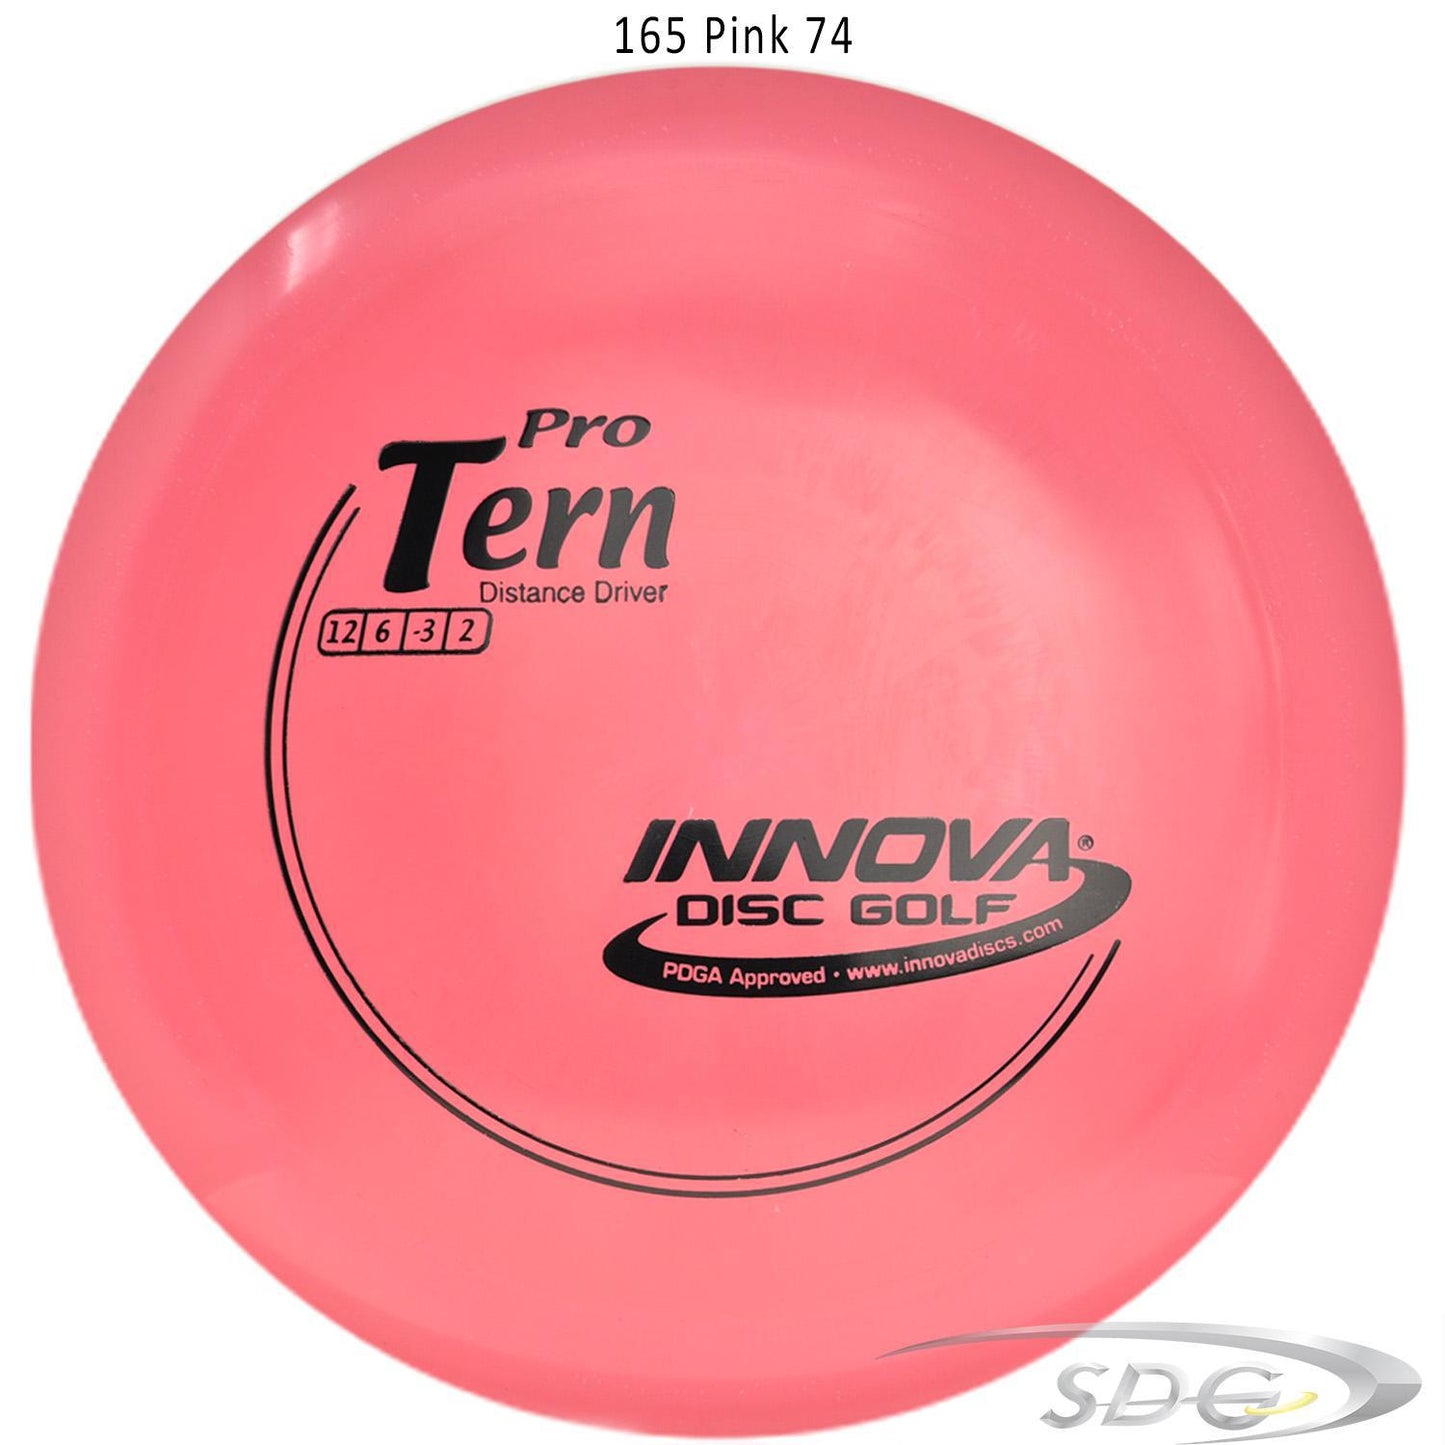 innova-pro-tern-disc-golf-distance-driver 165 Pink 74 